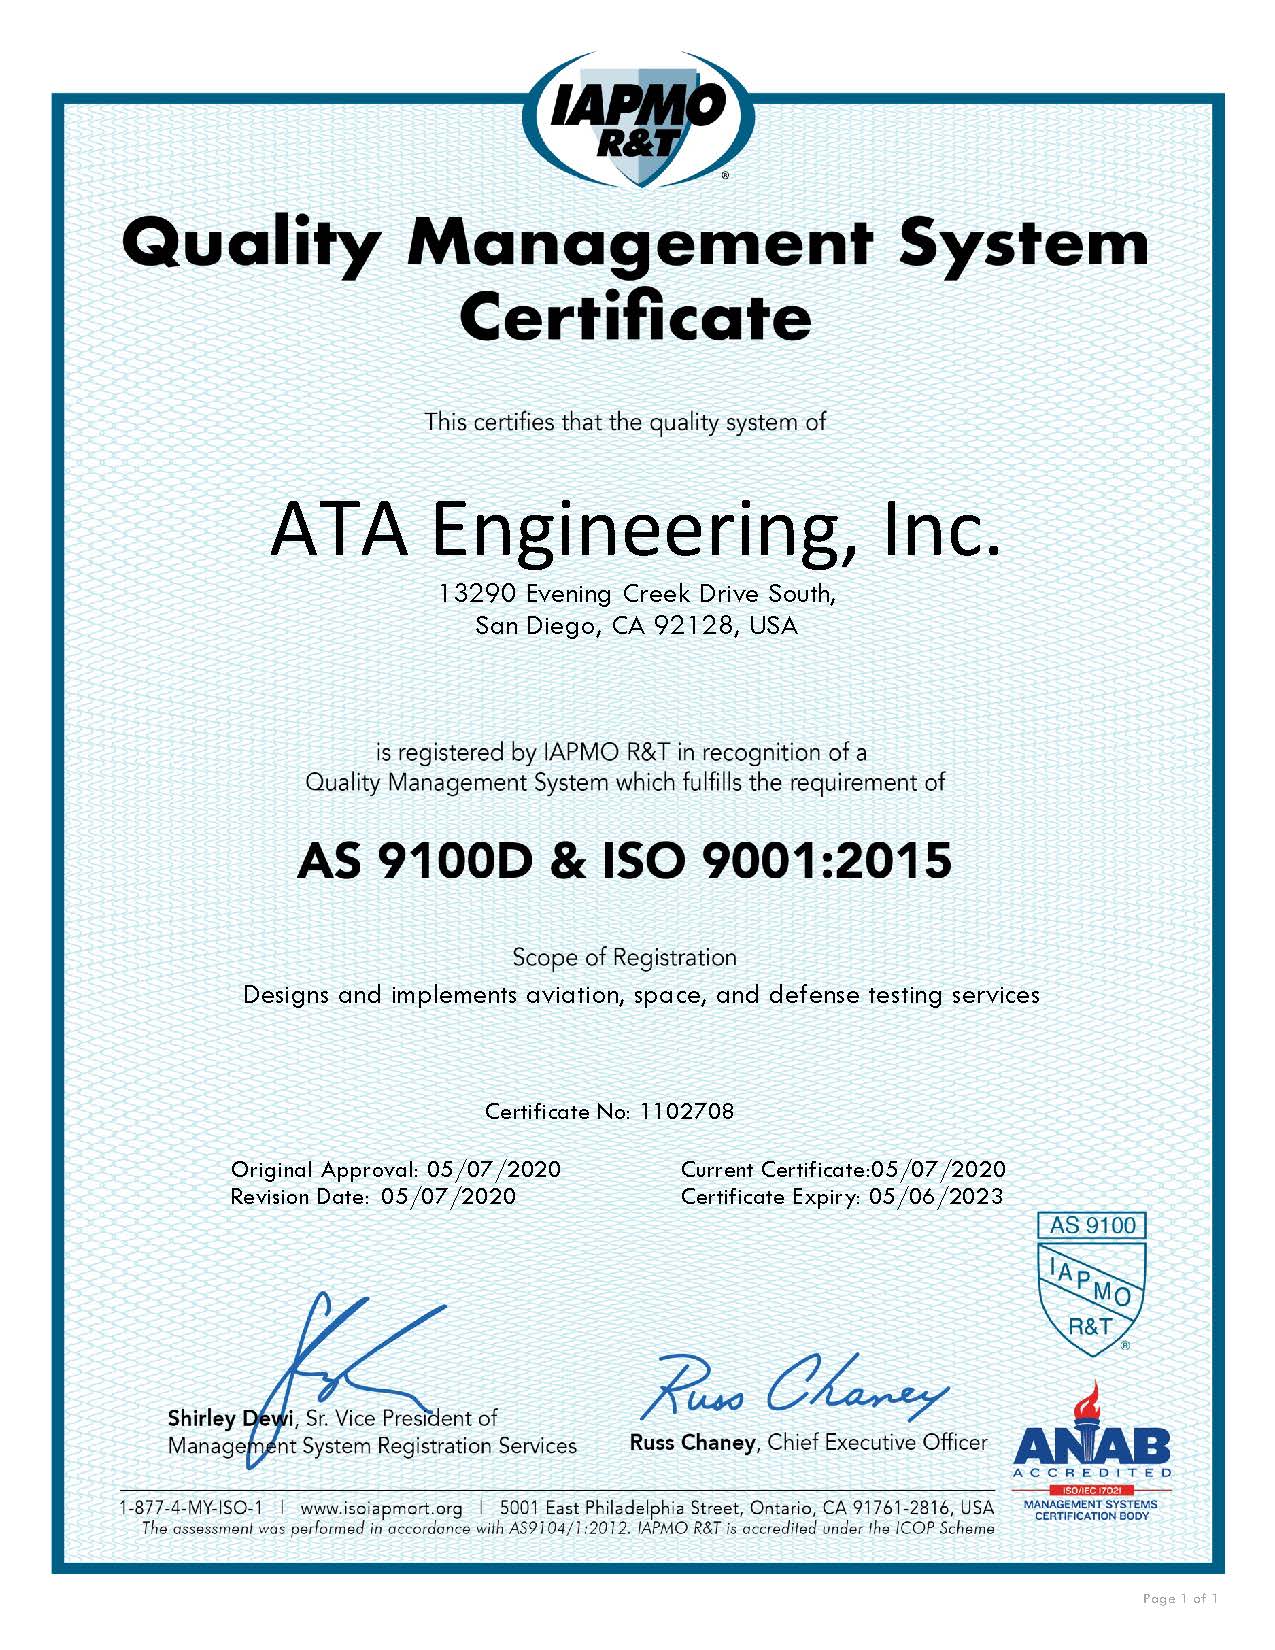 ATA Engineering Inc. AS 9100D Certificate 2020